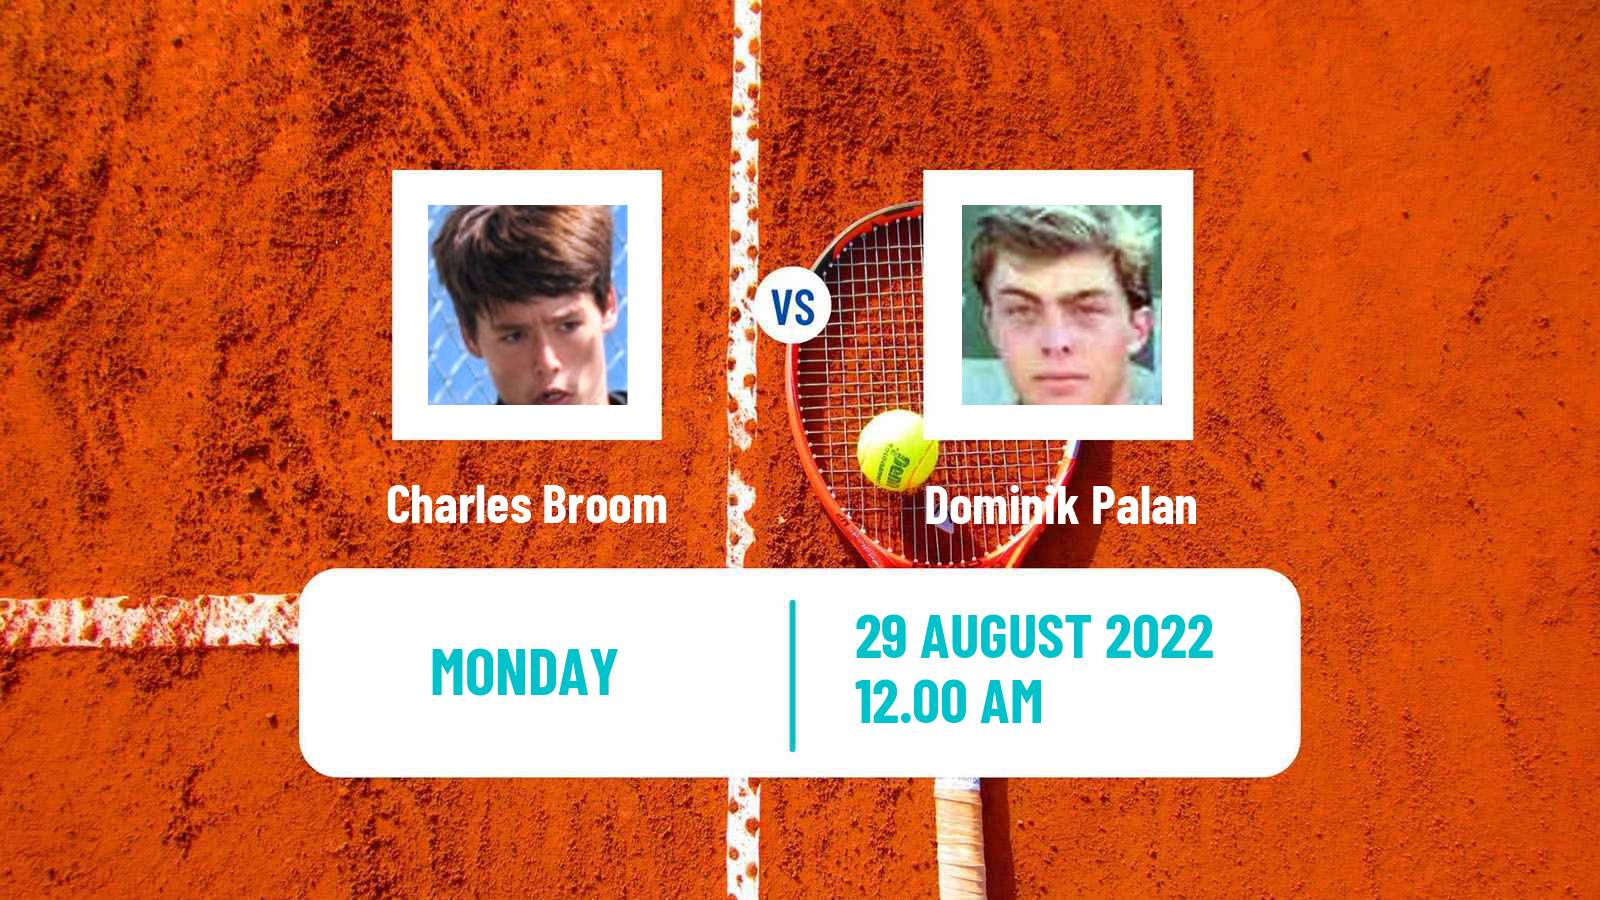 Tennis ATP Challenger Charles Broom - Dominik Palan